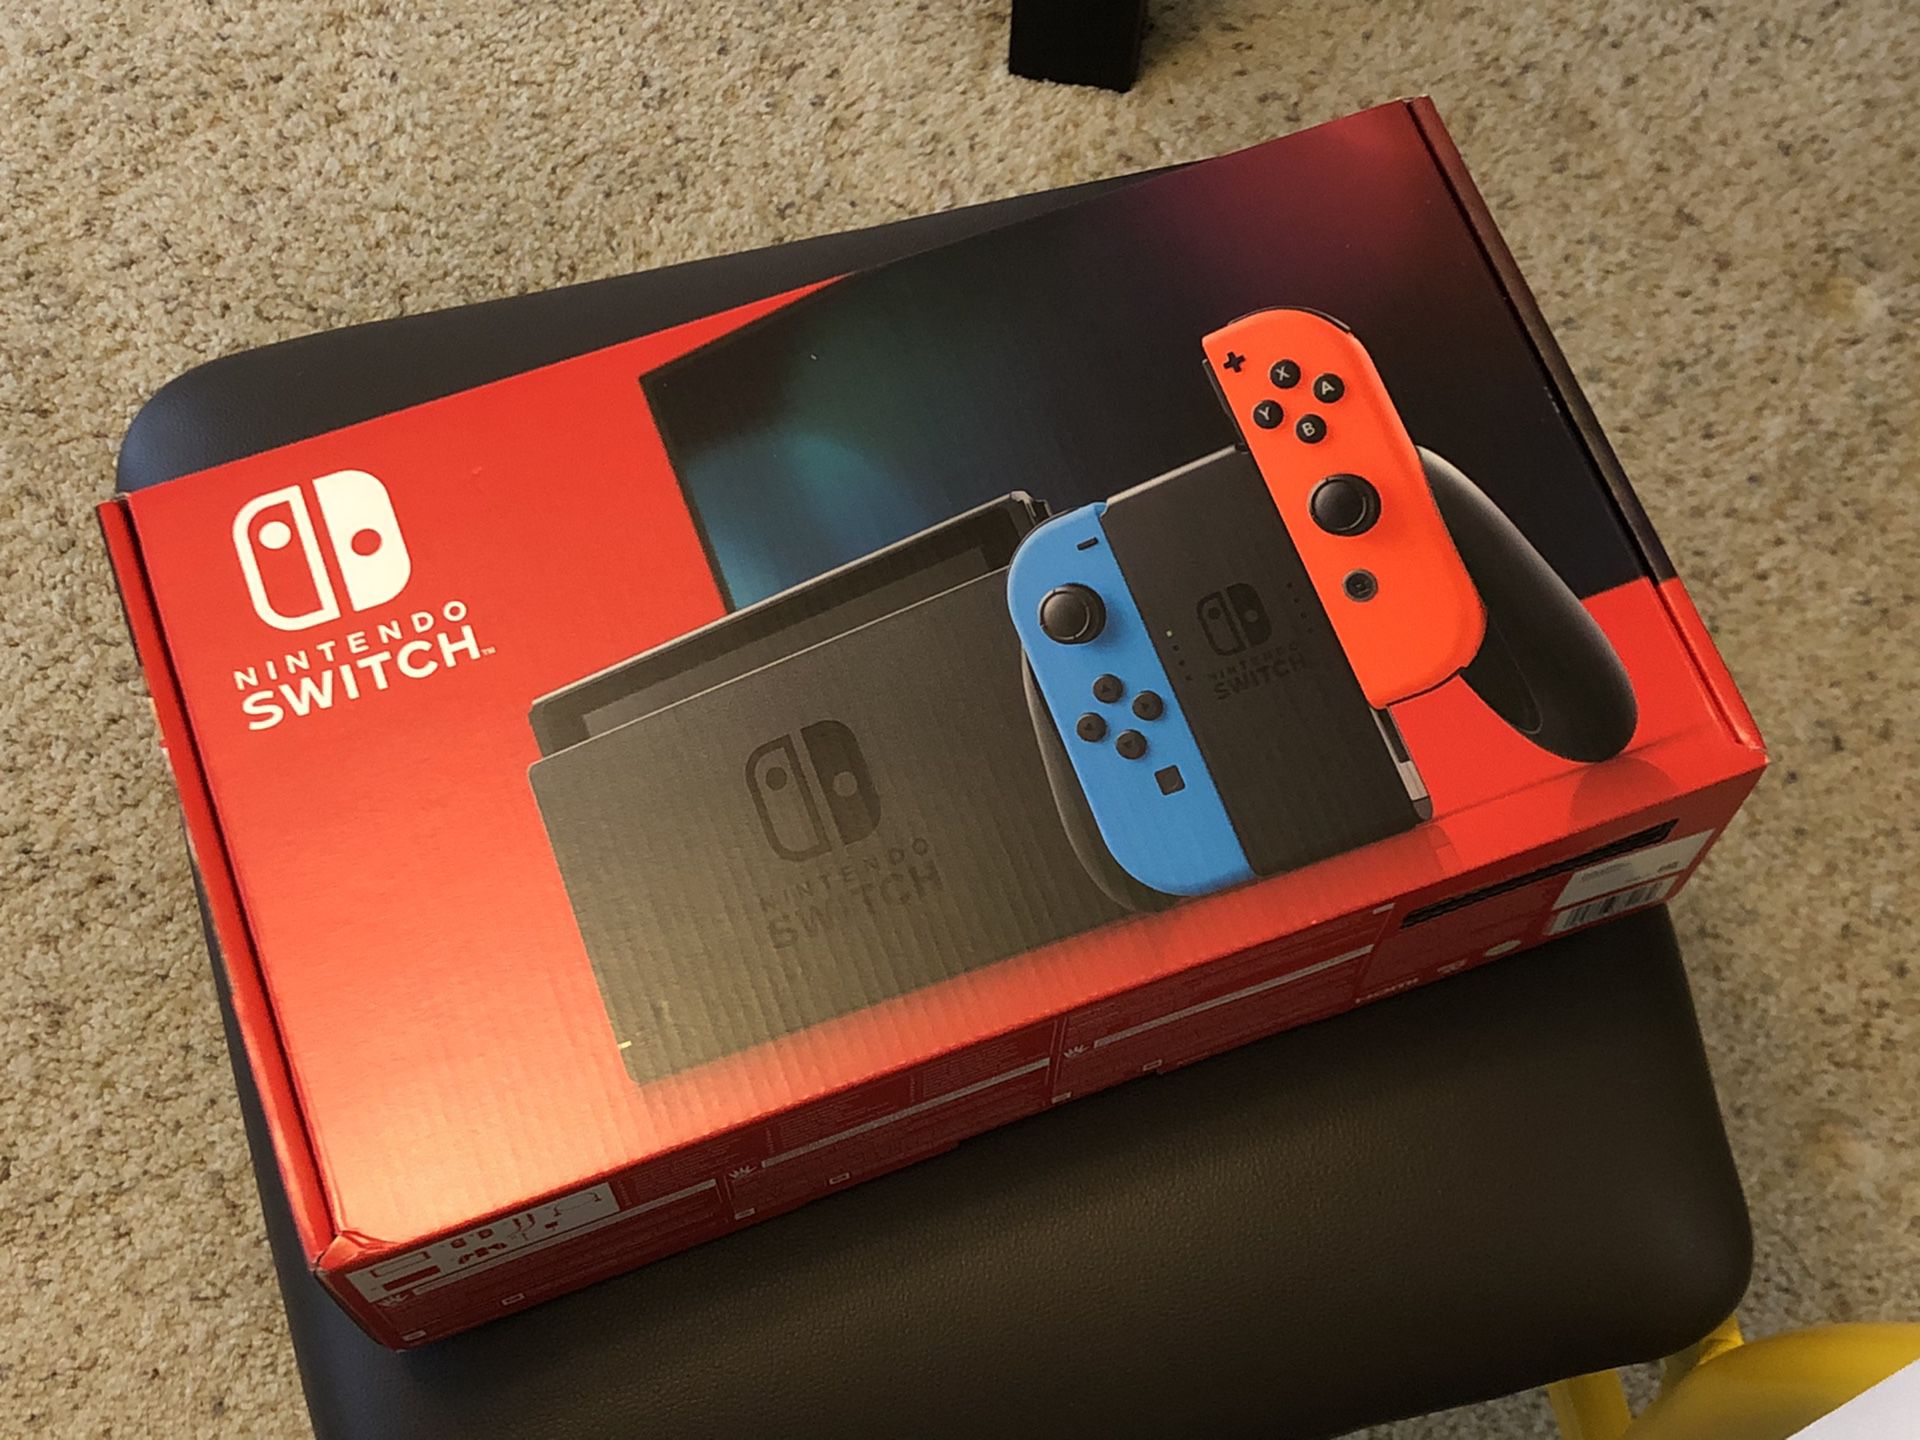 Brand new Switch